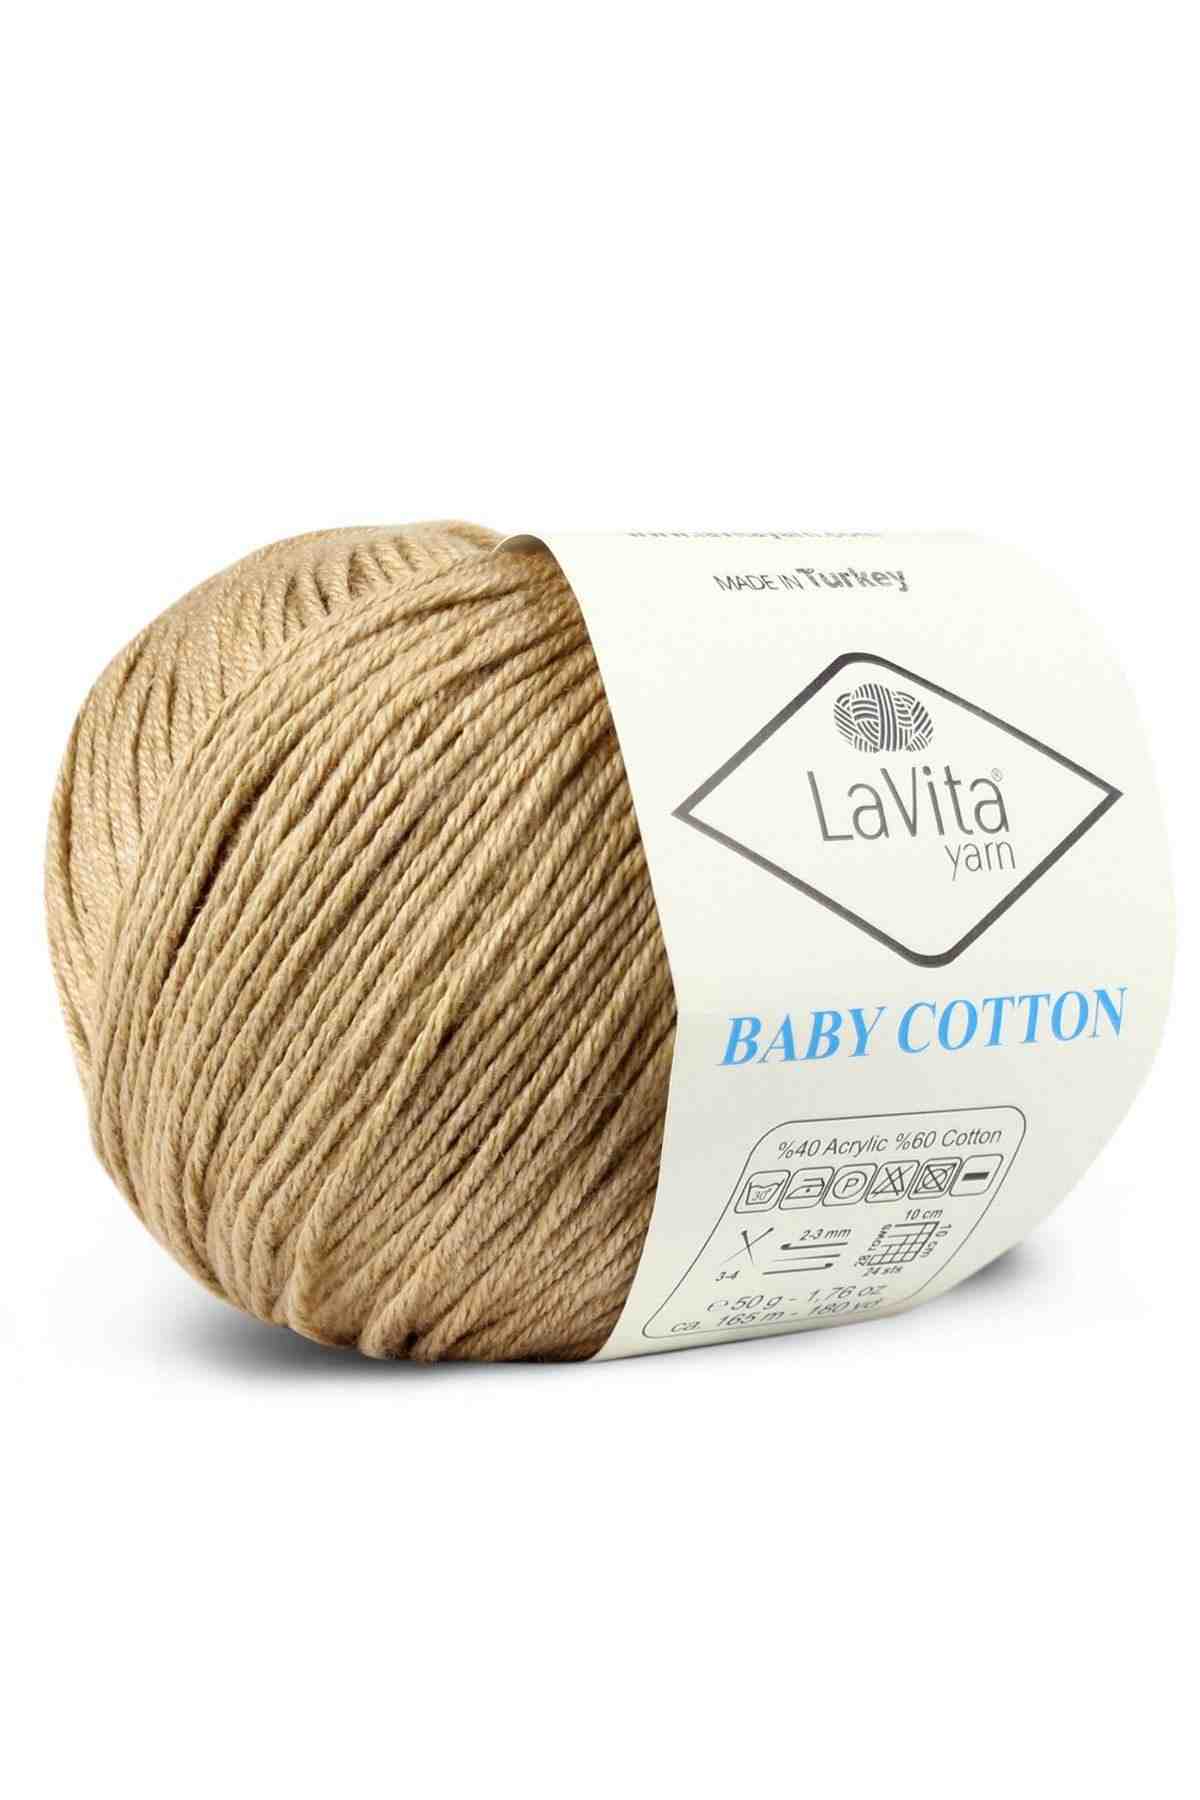 Lavita Baby Cotton Cotton Yarn